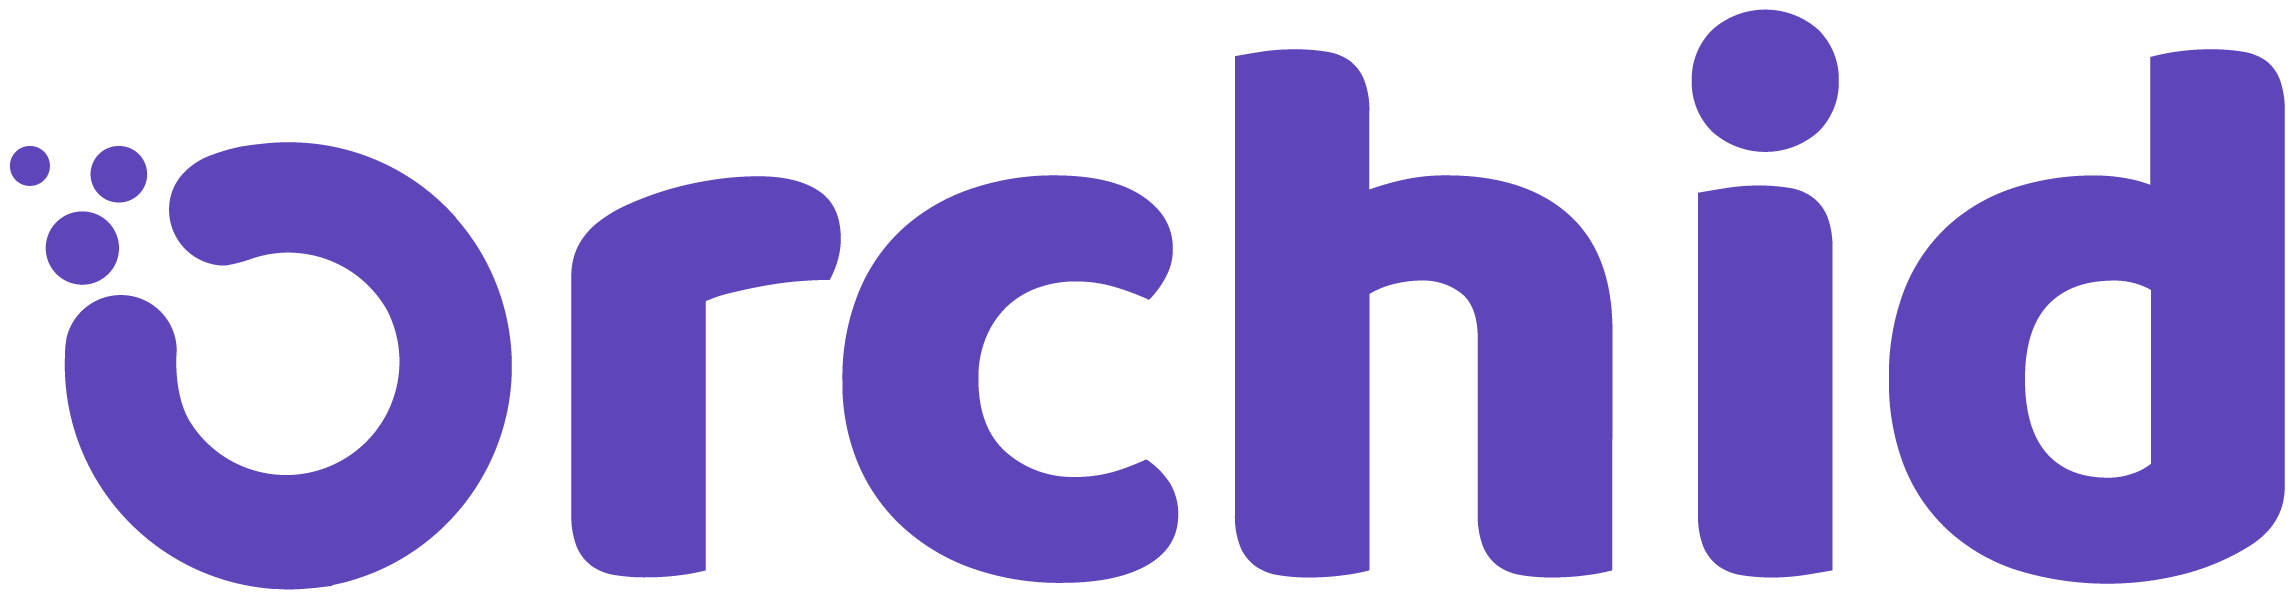 Orchid logo colors